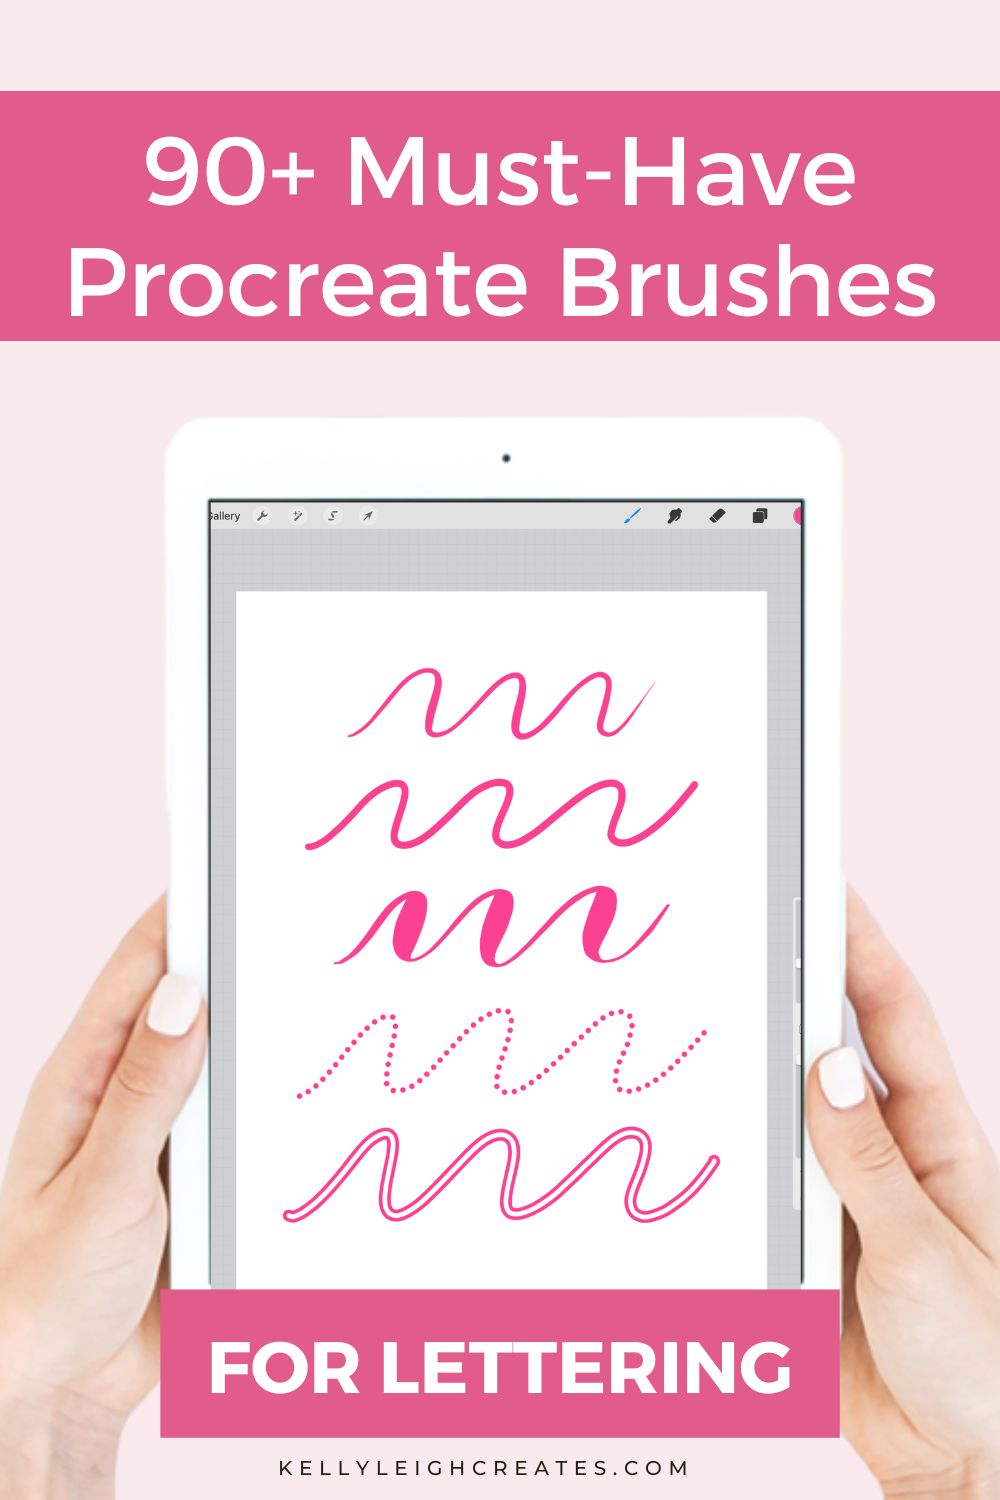 procreate brushes for lettering